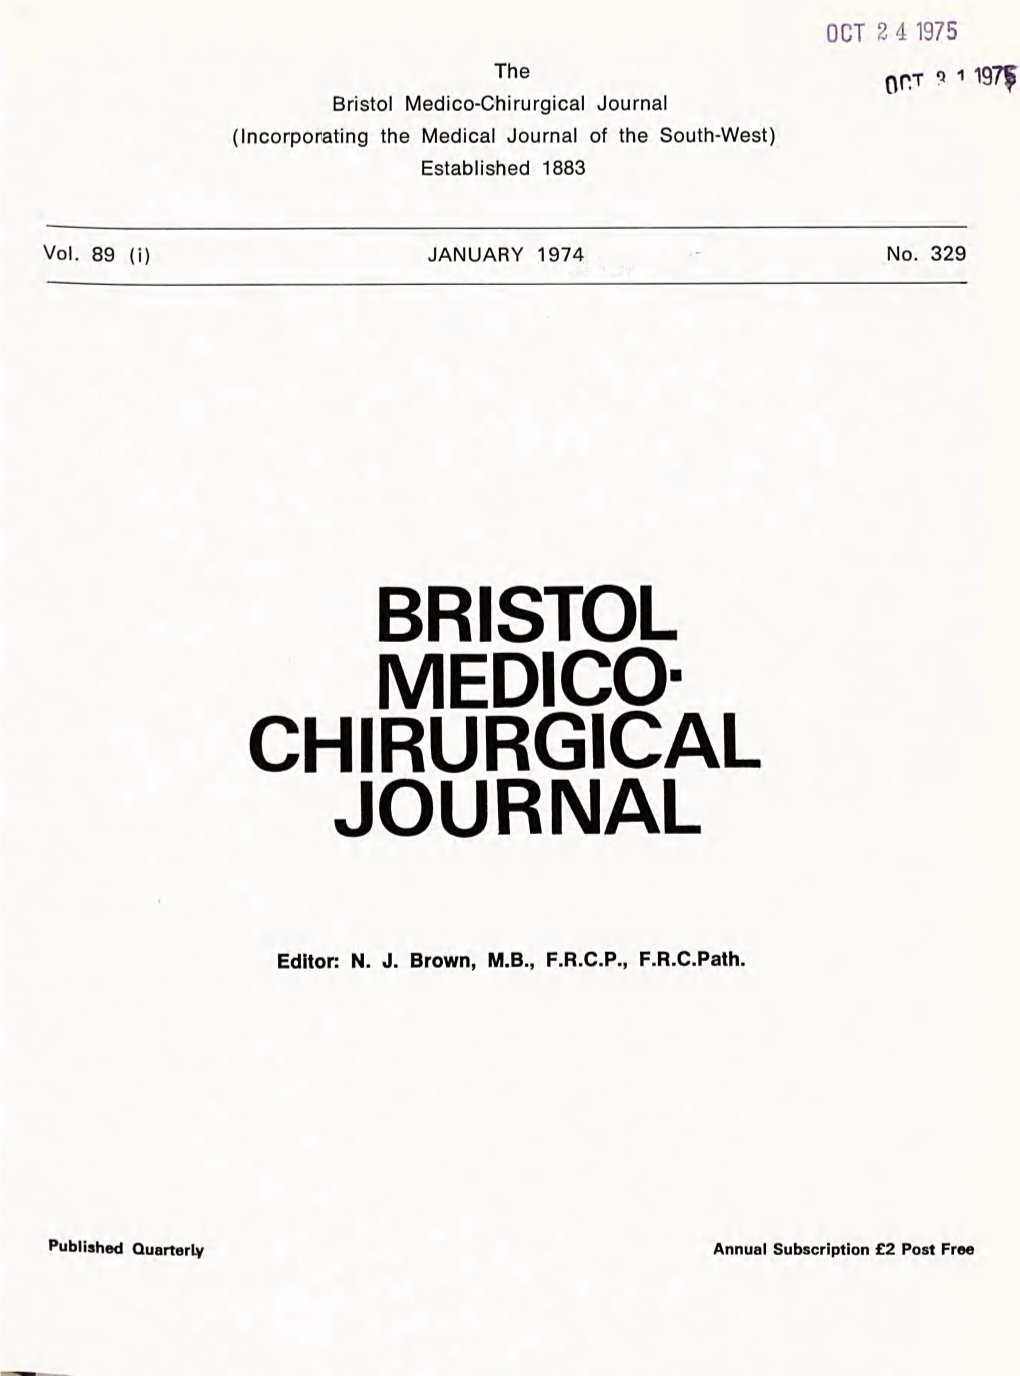 Medico- Chirurgical Journal